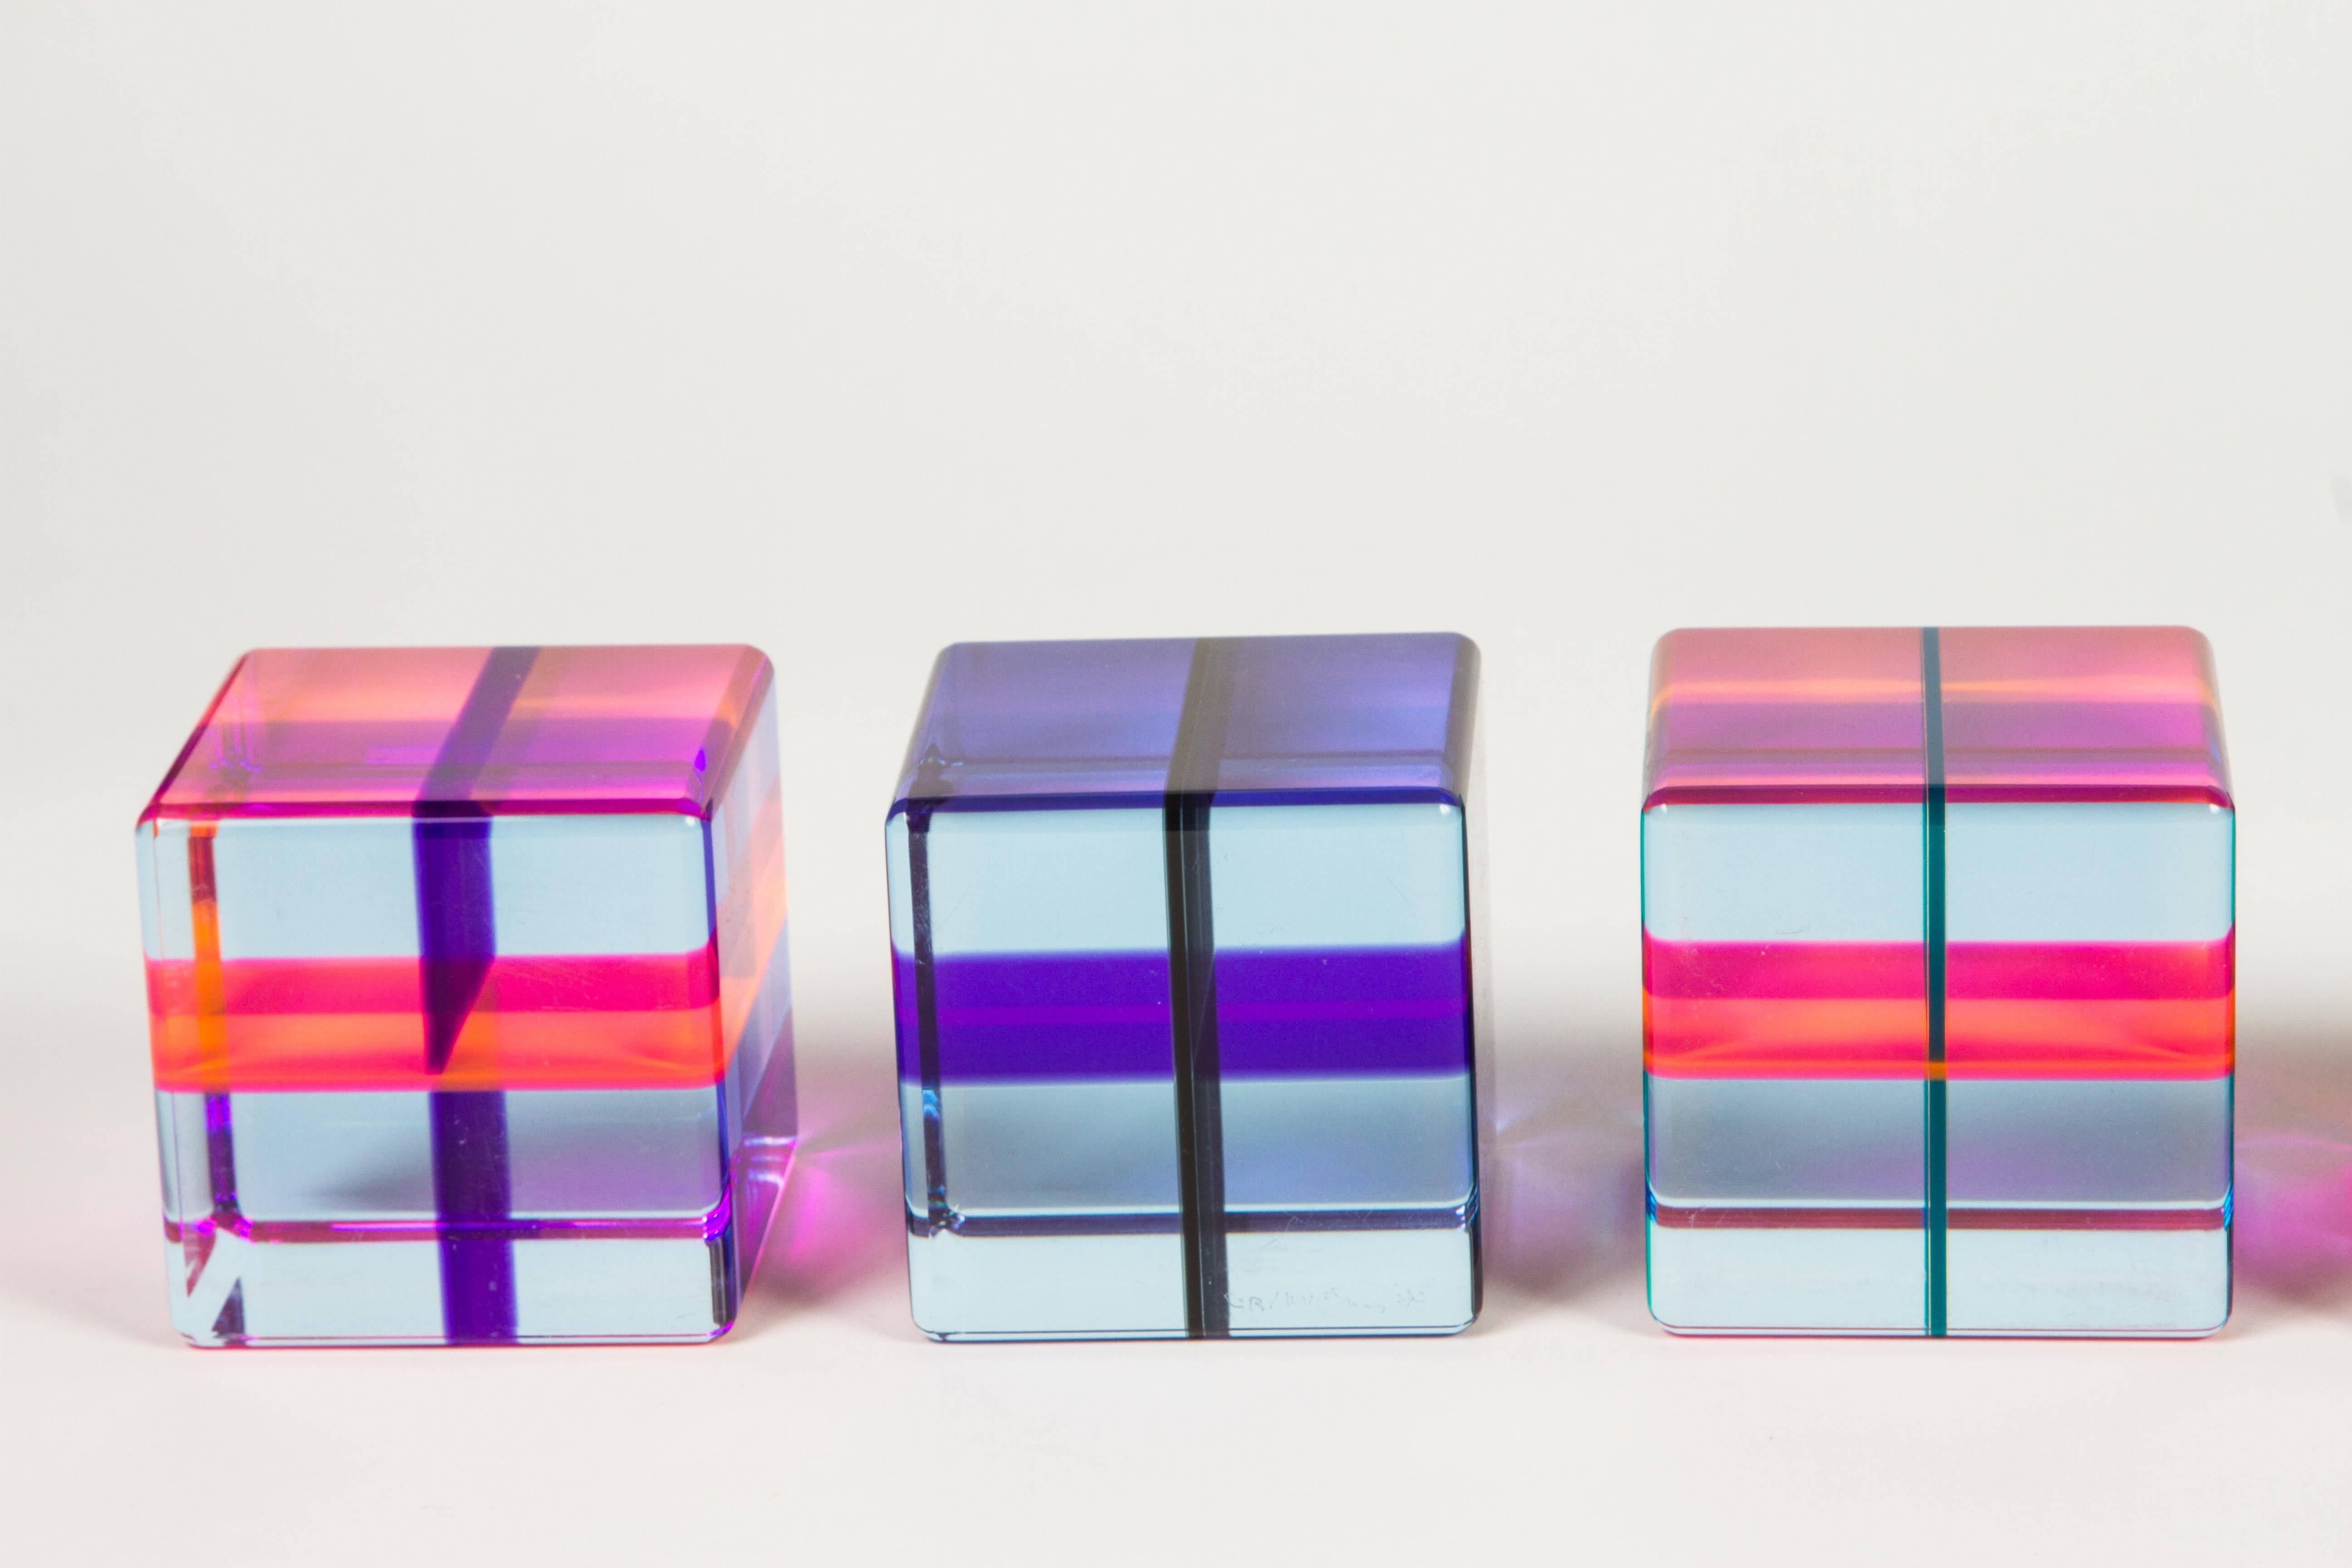 Polished Multi-Color Large Cube Sculpture by Vassa